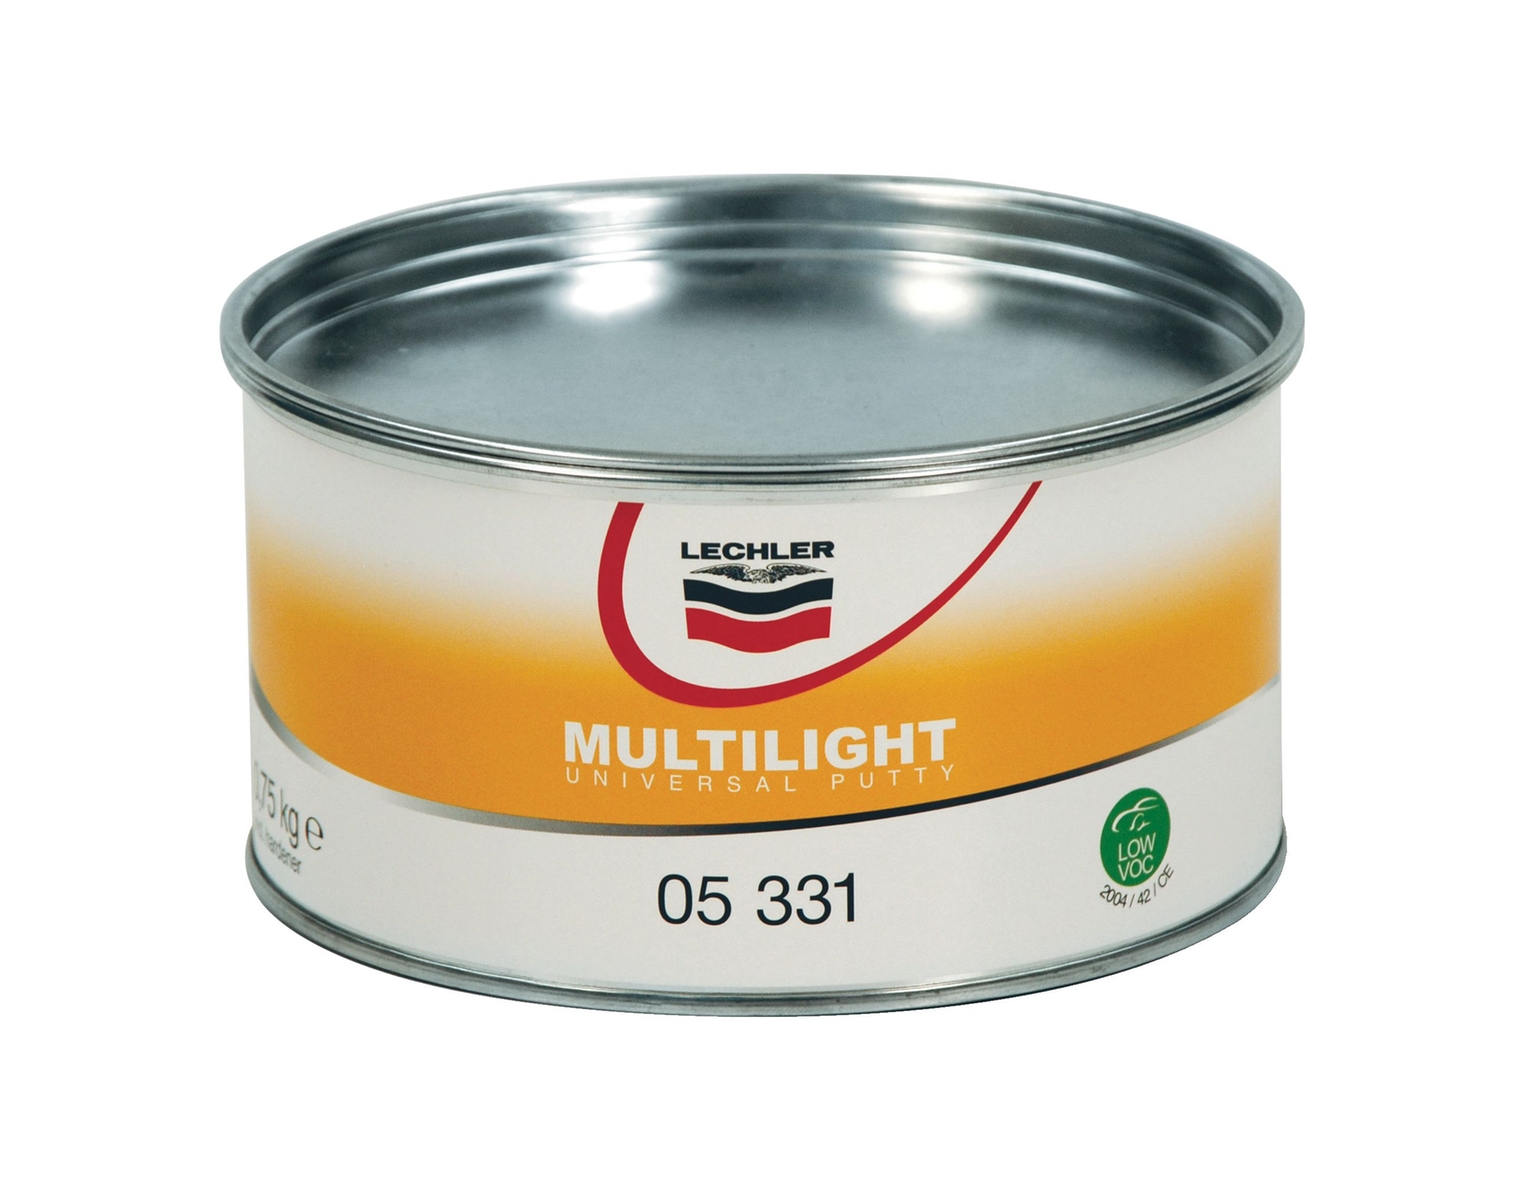 Lechler Multilight, 05331, 0.75 kg